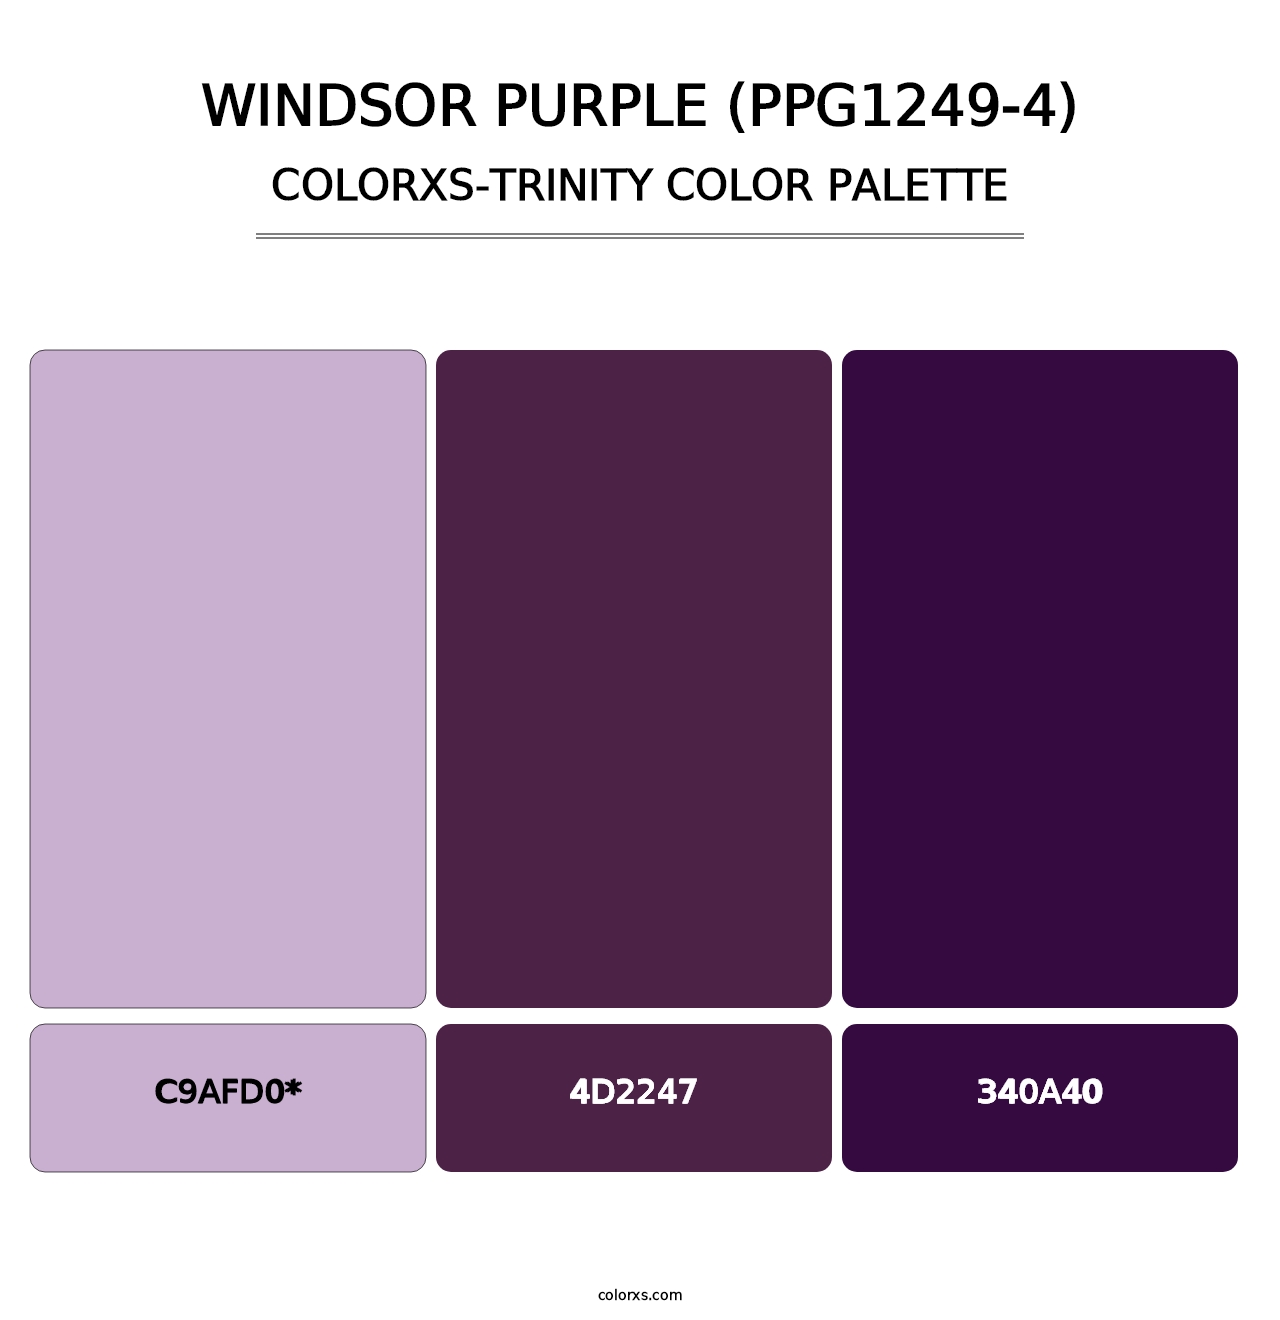 Windsor Purple (PPG1249-4) - Colorxs Trinity Palette